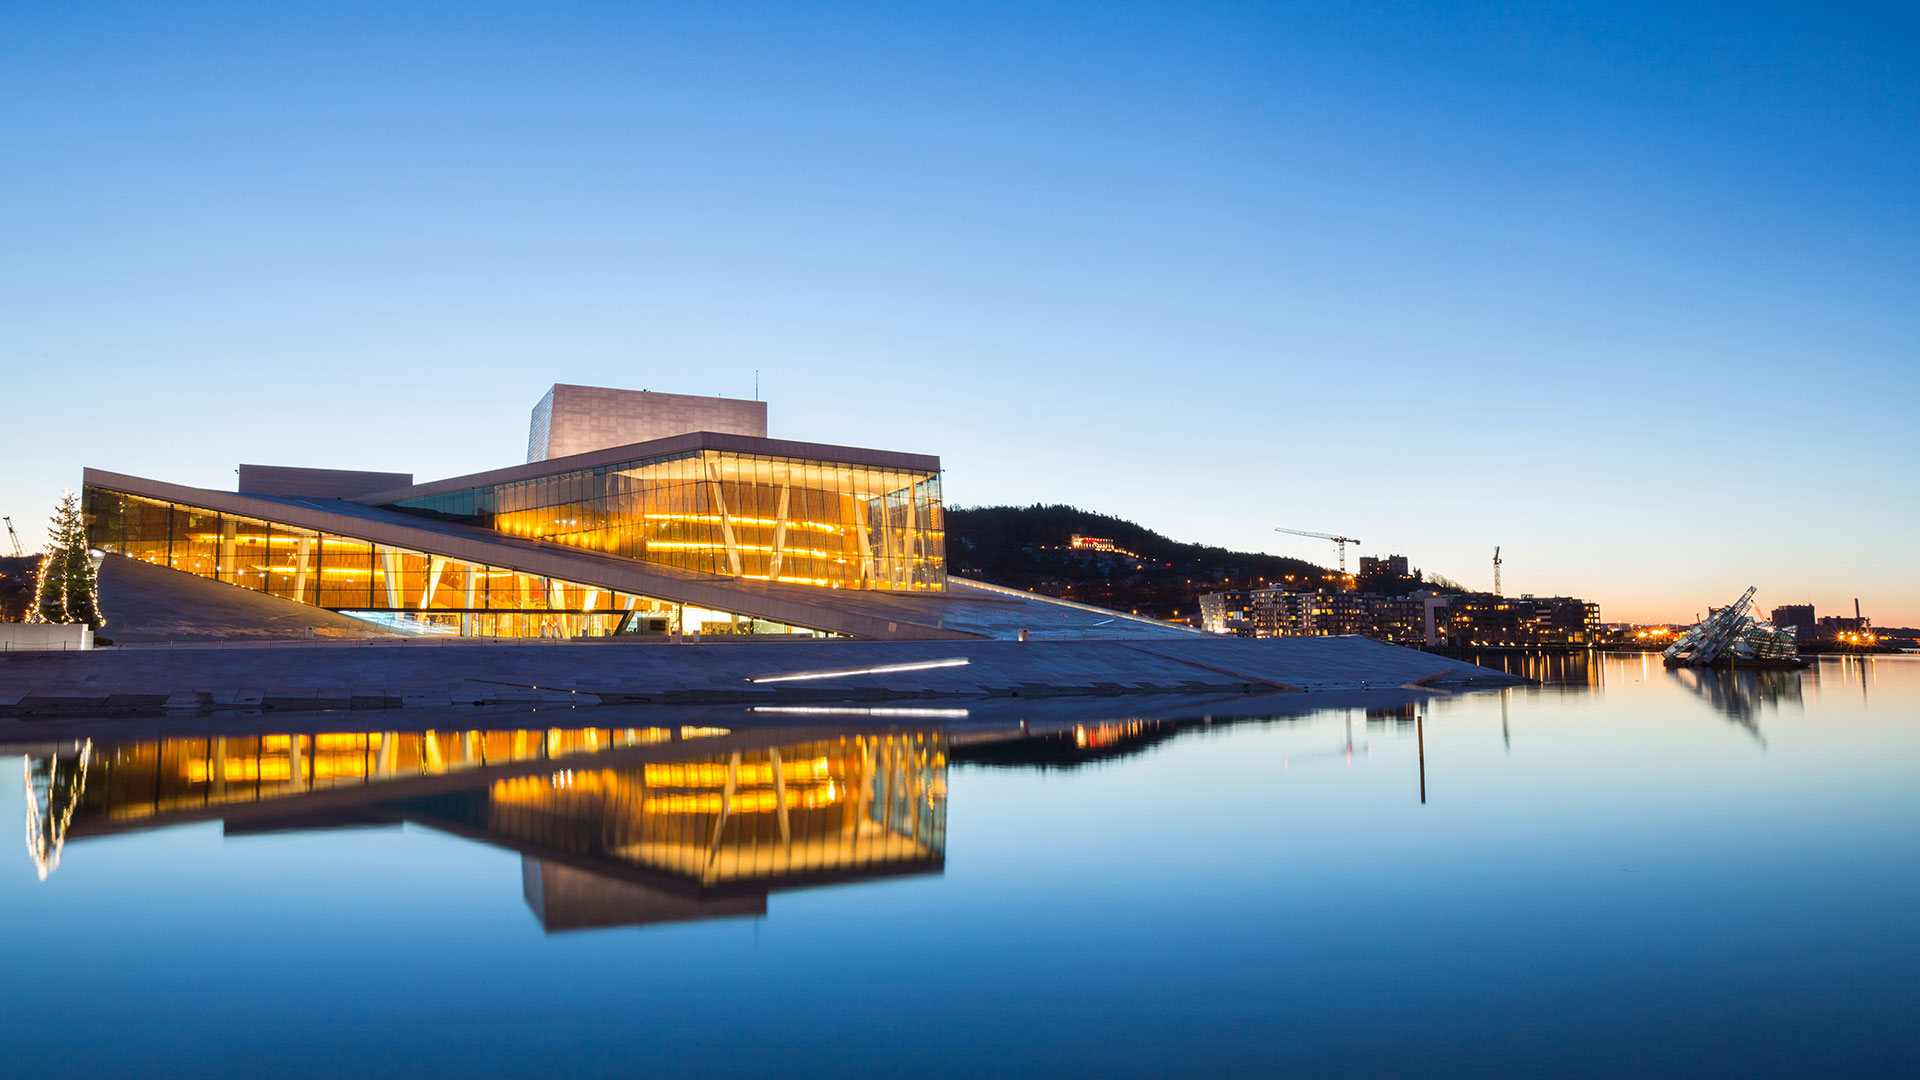 The Opera House in Oslo